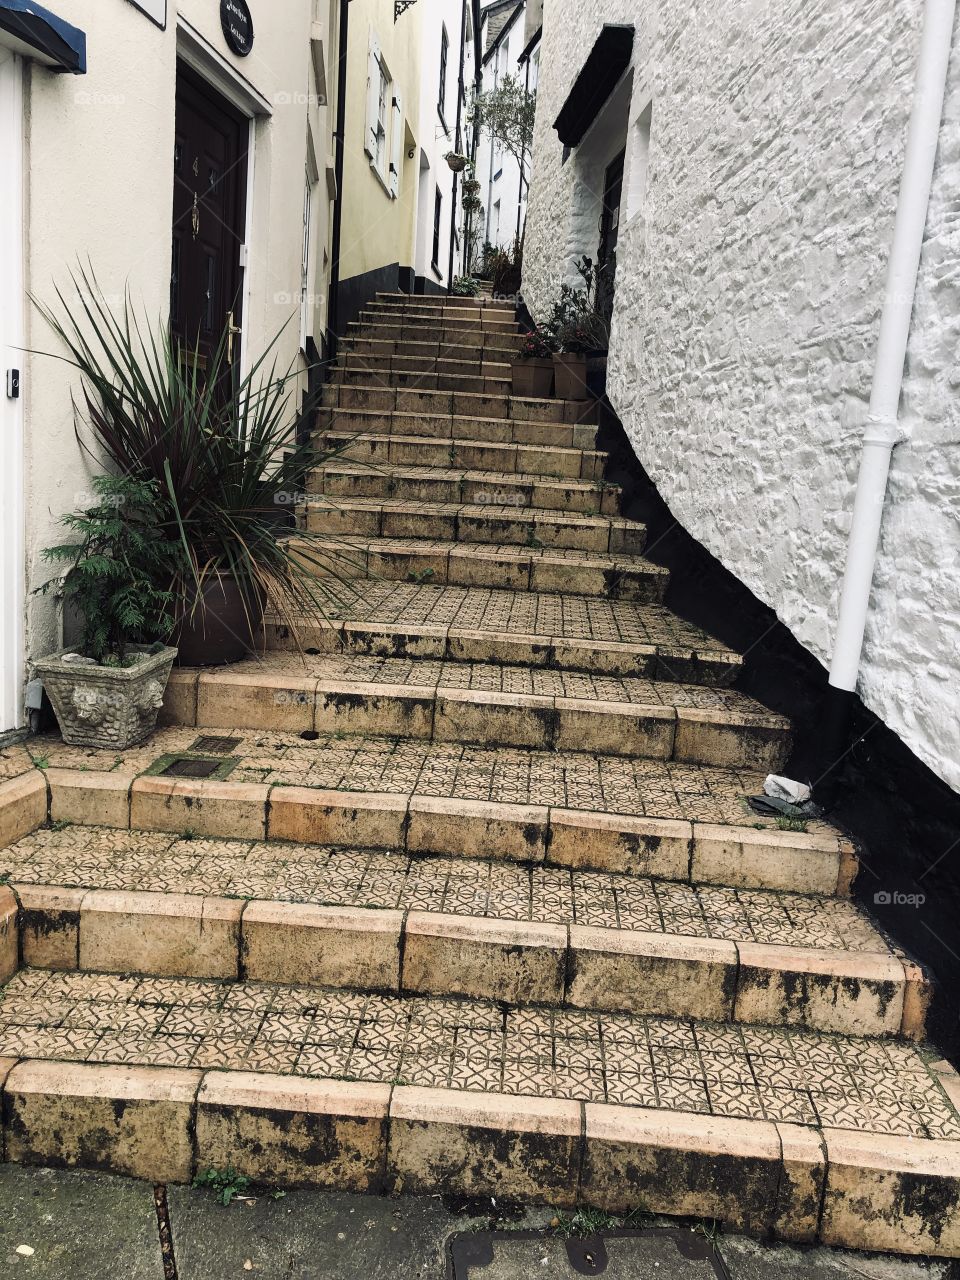 A set of impressive Devon steps in Brixham, Devon, that pave the way for a destination.